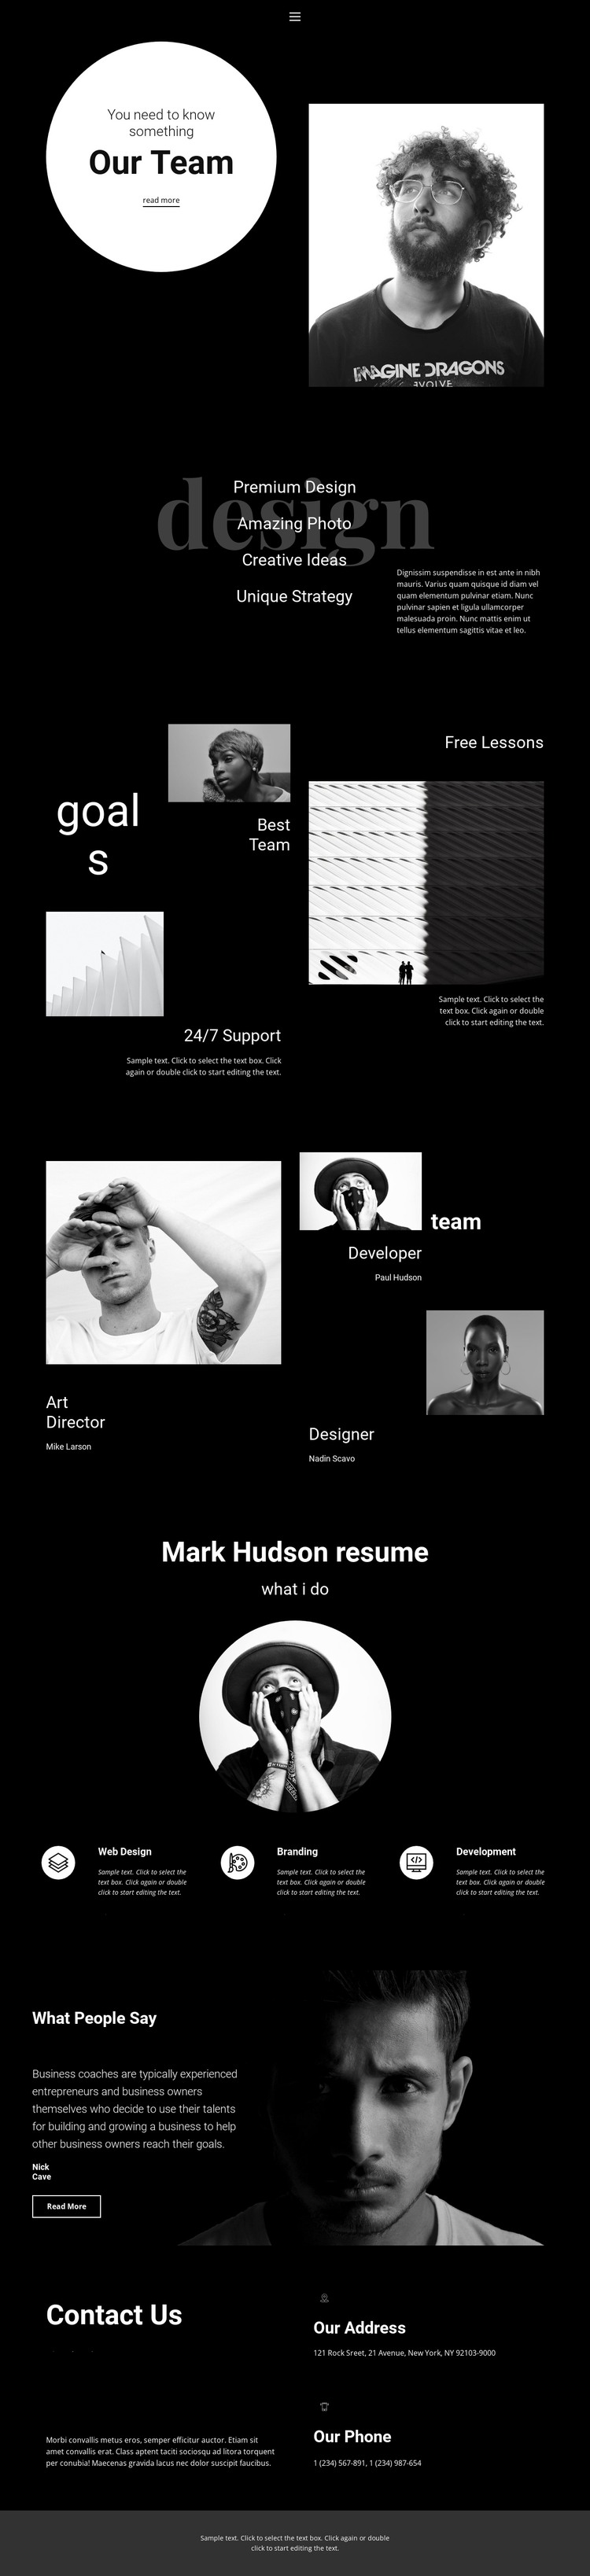 Design and development team Web Design